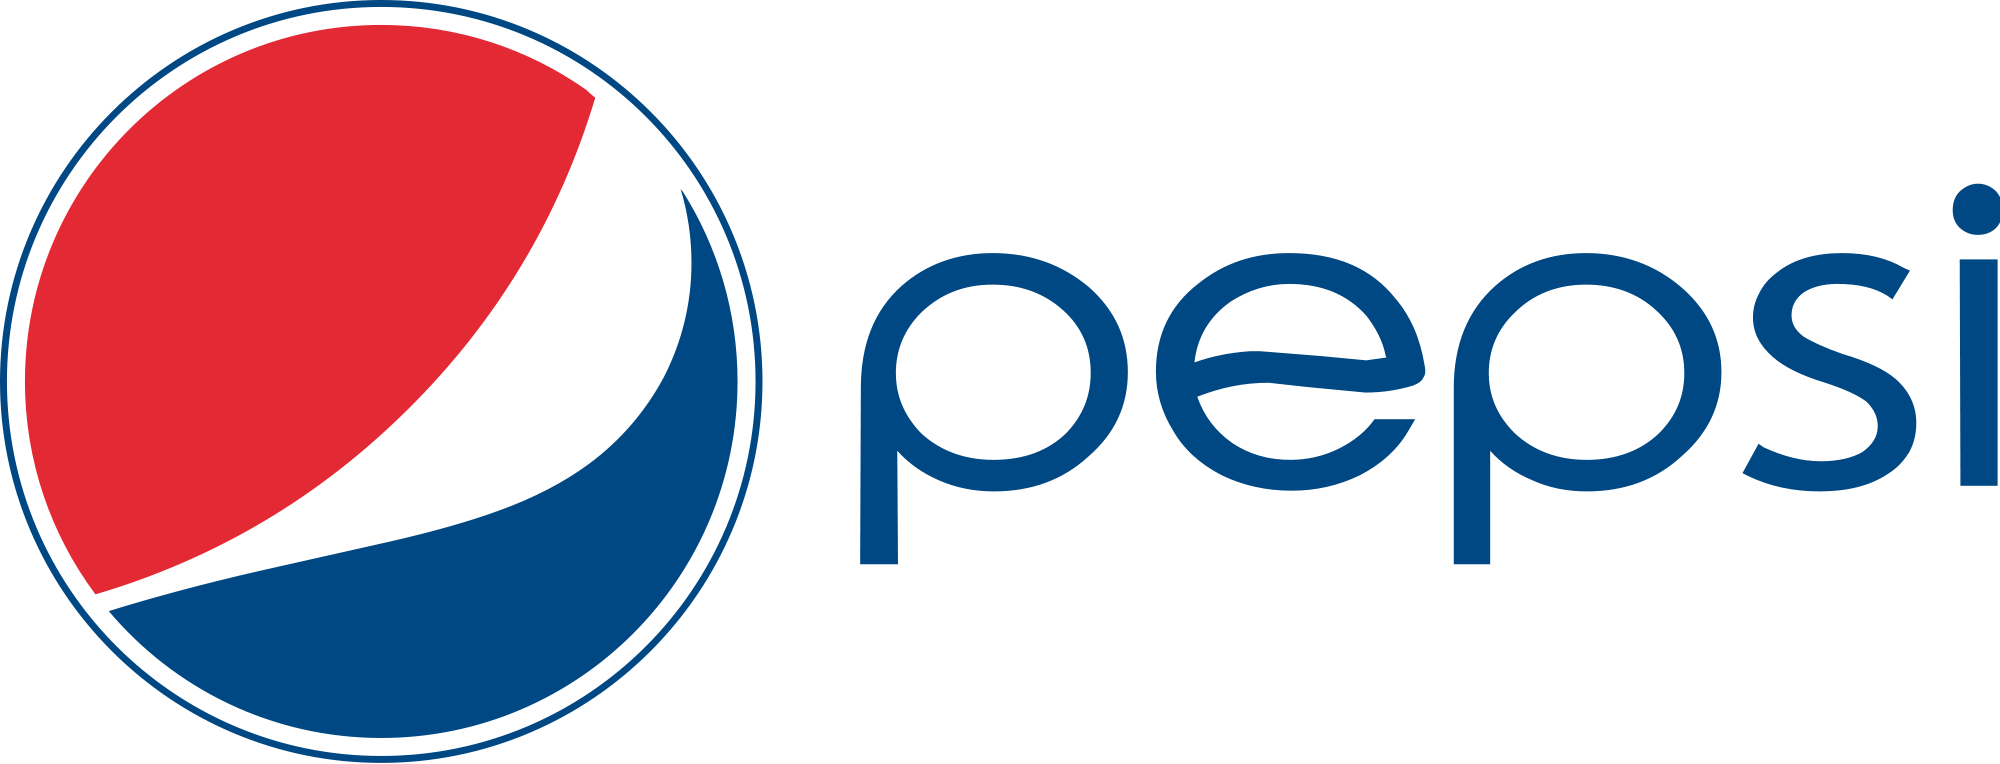 Pepsi Logo Wallpapers